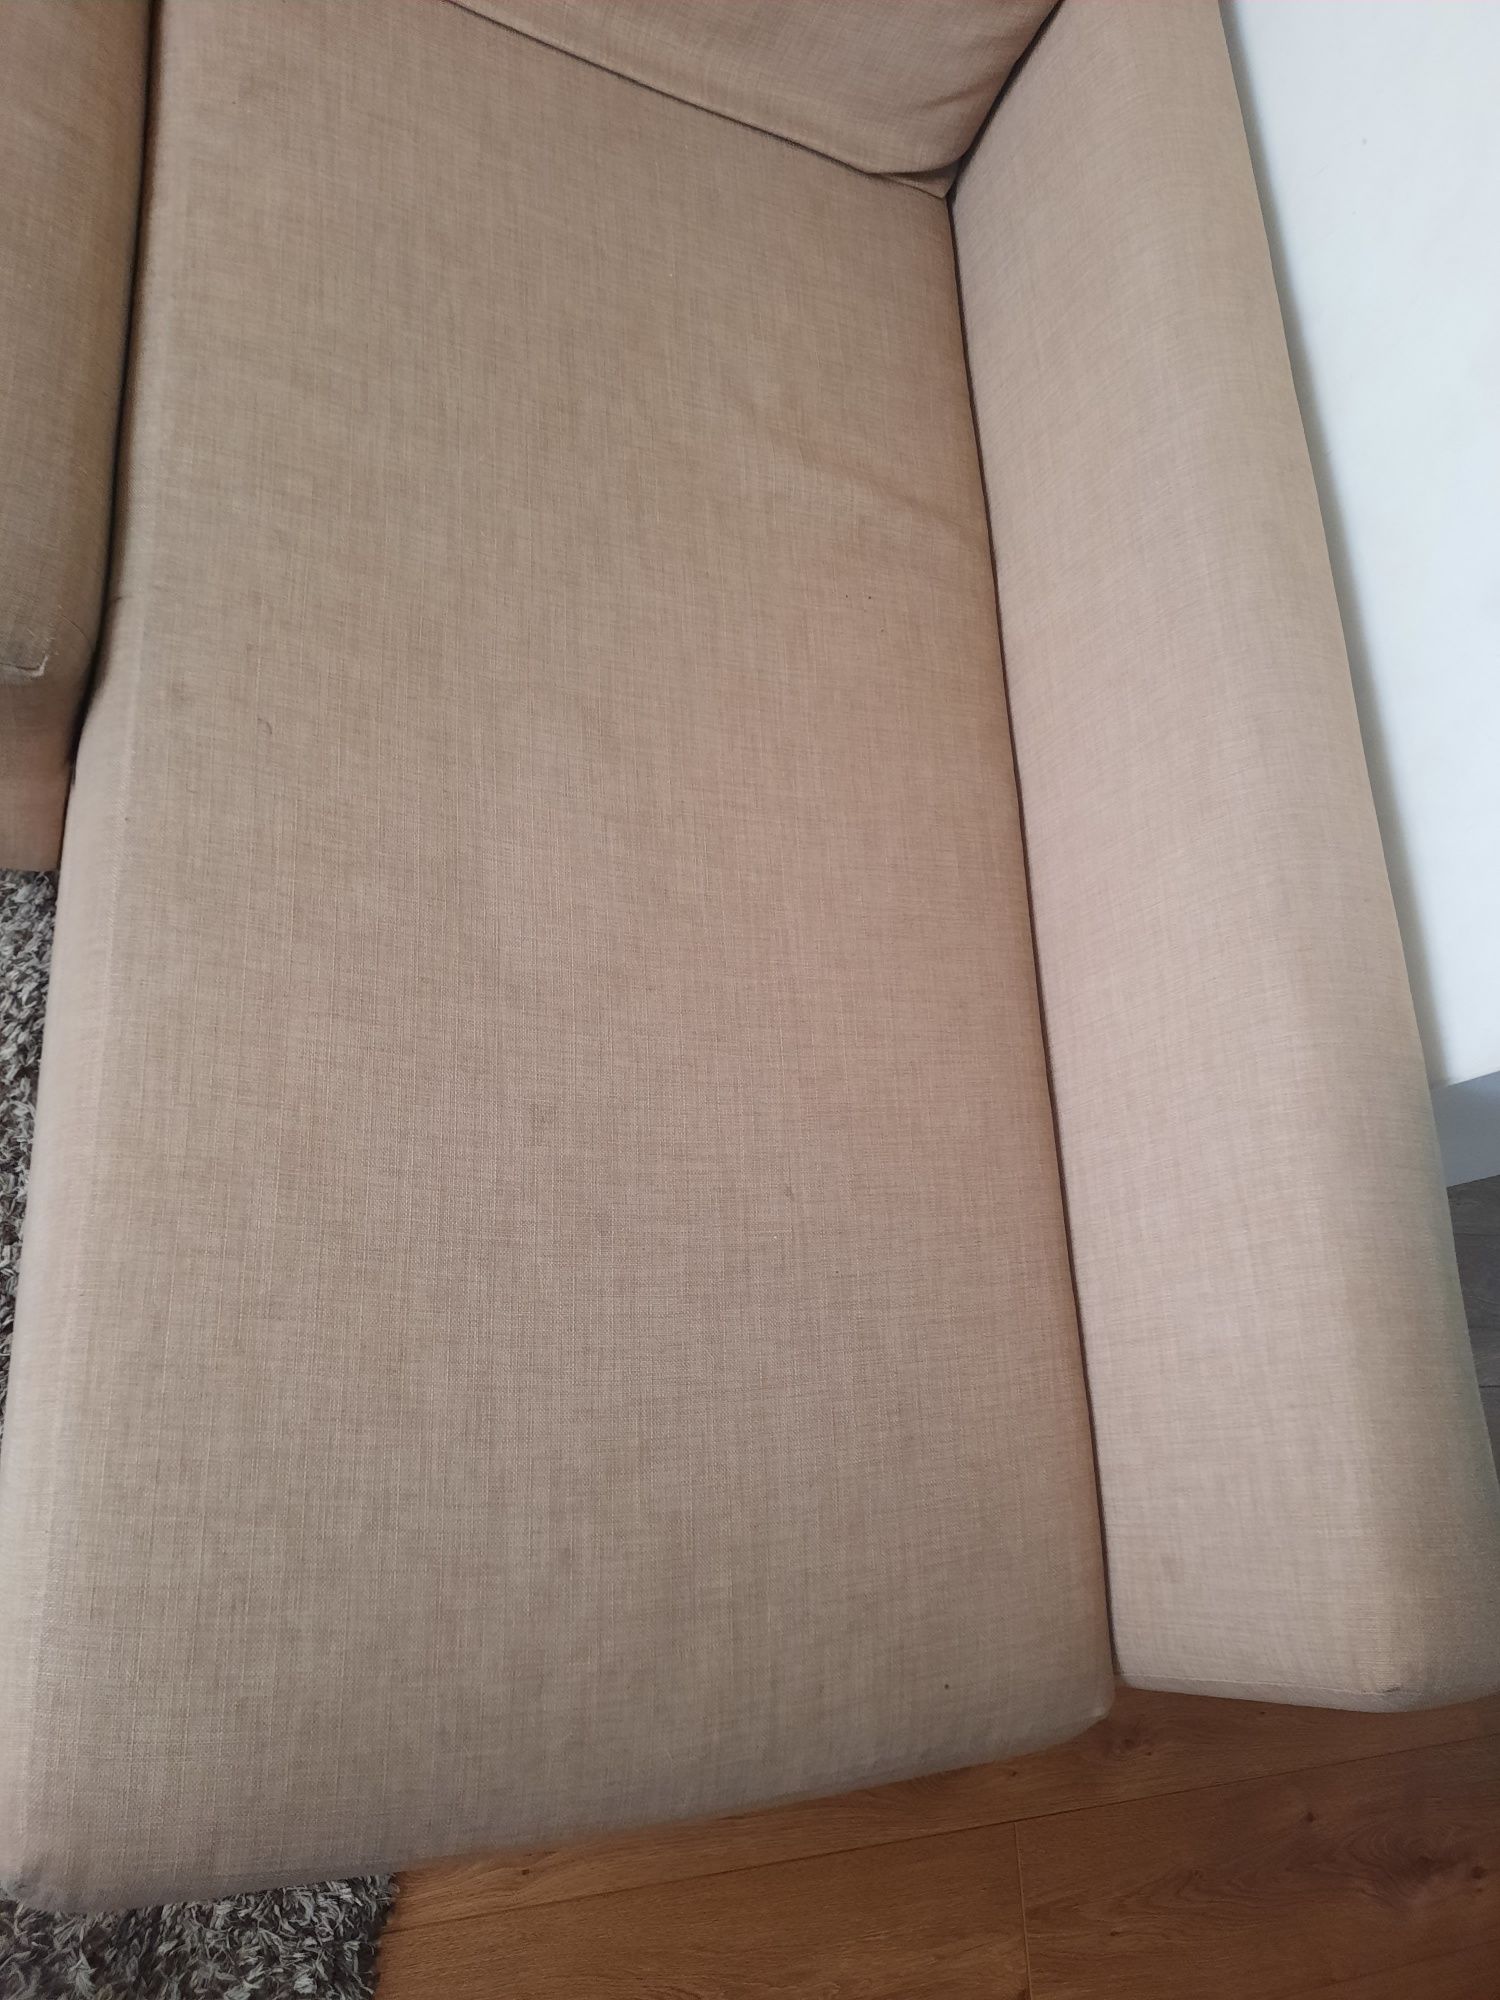 Sofá Ikea Friheten com chaise long e cama